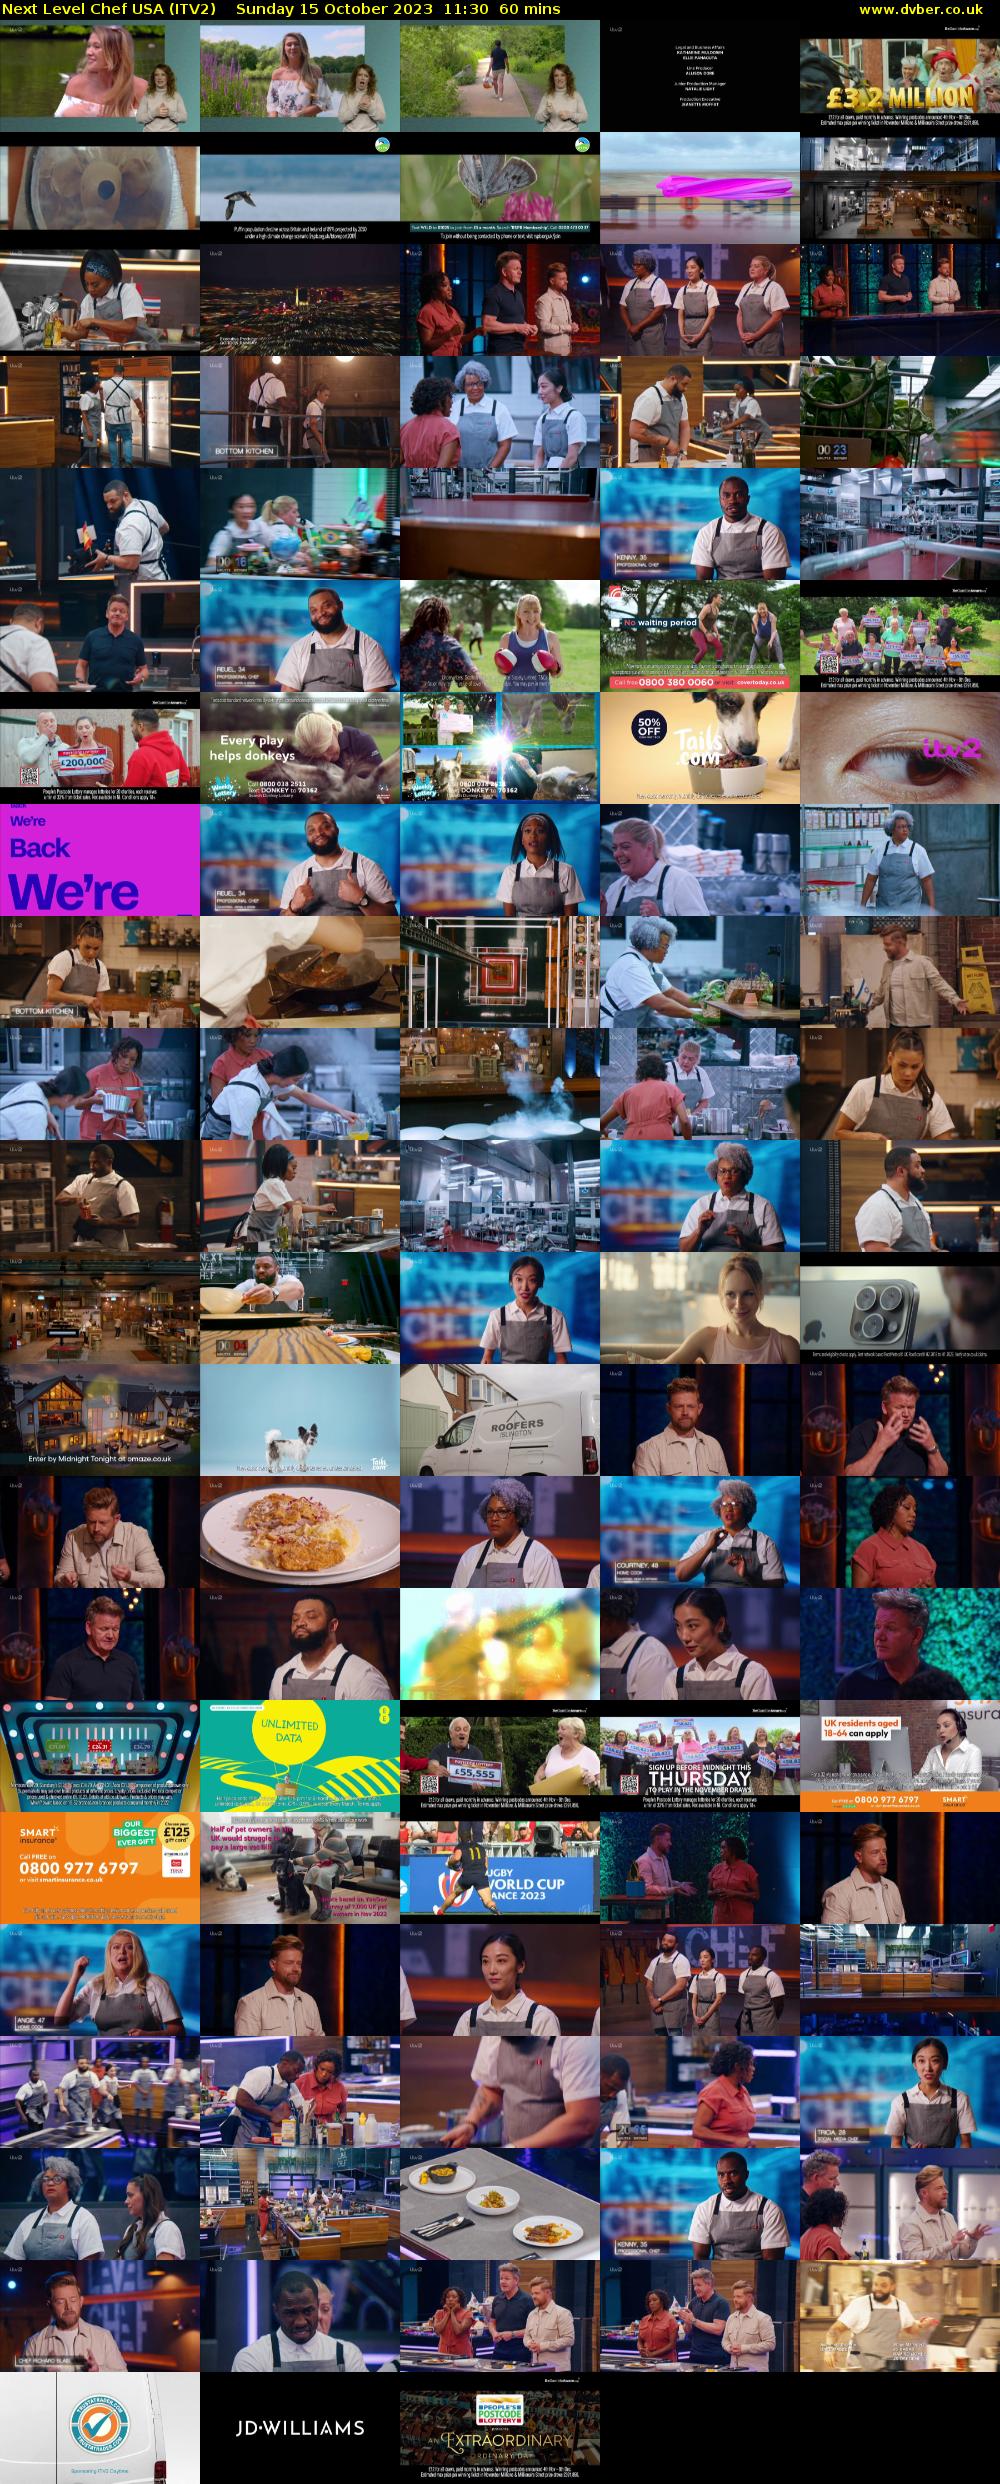 Next Level Chef USA (ITV2) Sunday 15 October 2023 11:30 - 12:30